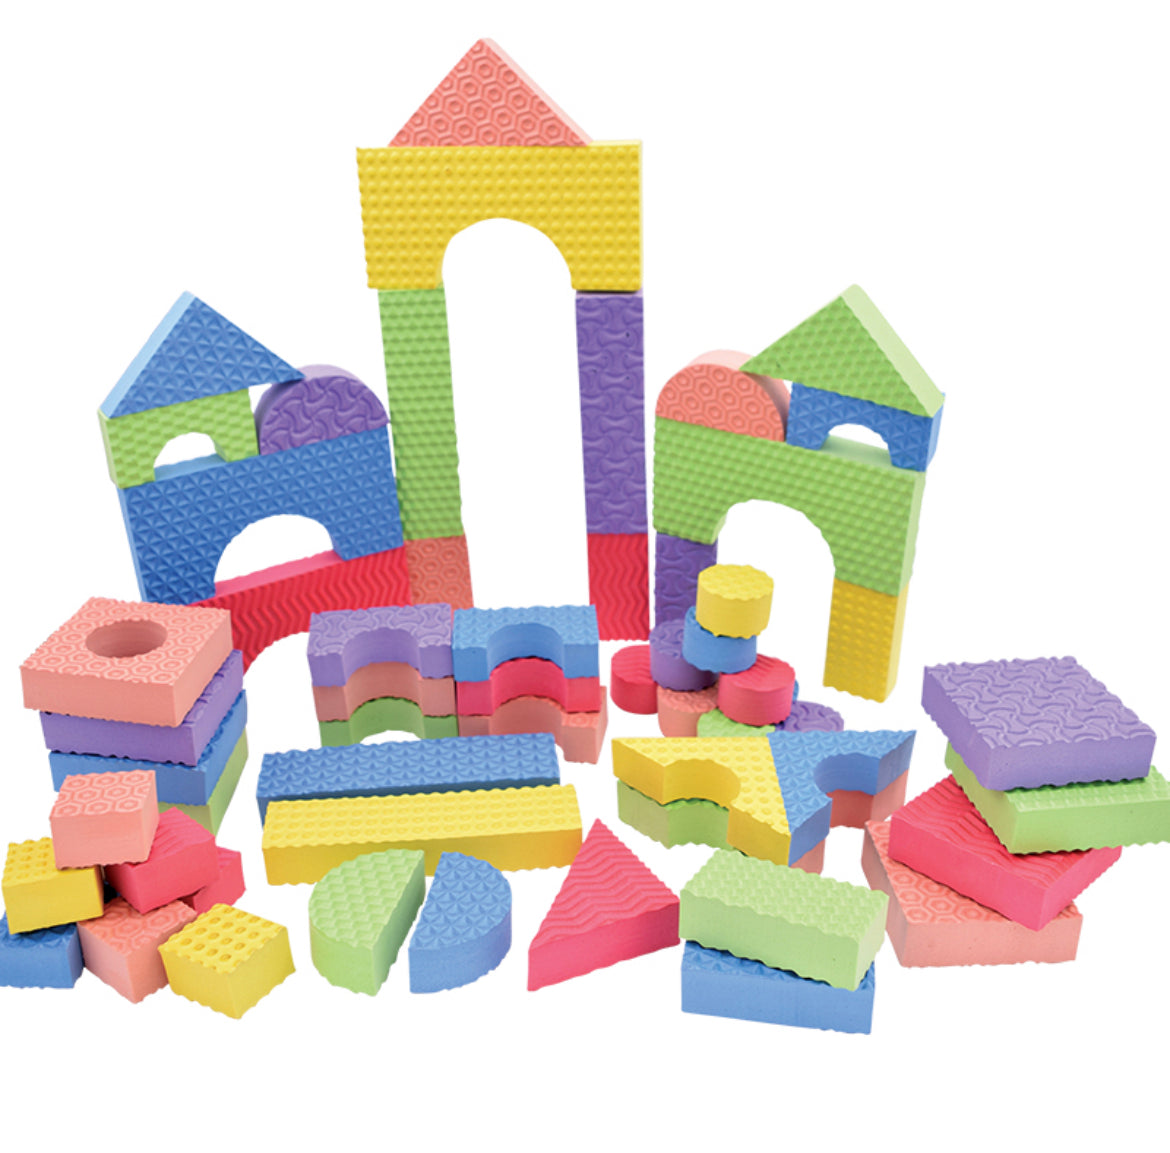 60 x Jumbo Foam Building Construction Textured Blocks